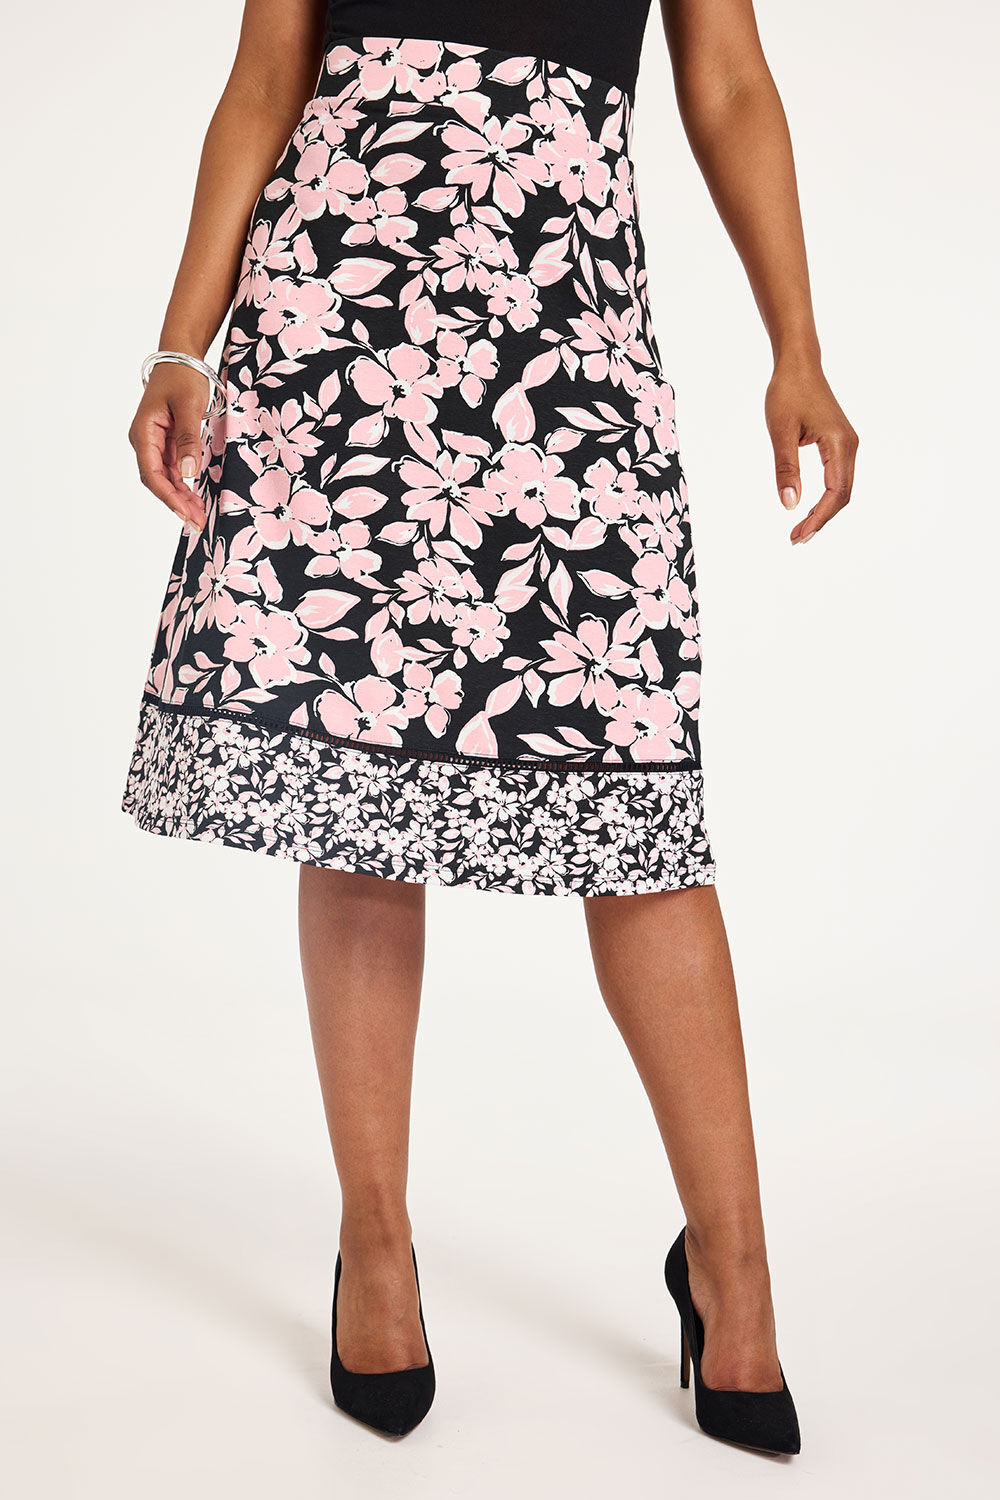 Bonmarche Black Floral Border Print A-Line Jersey Skirt, Size: 10